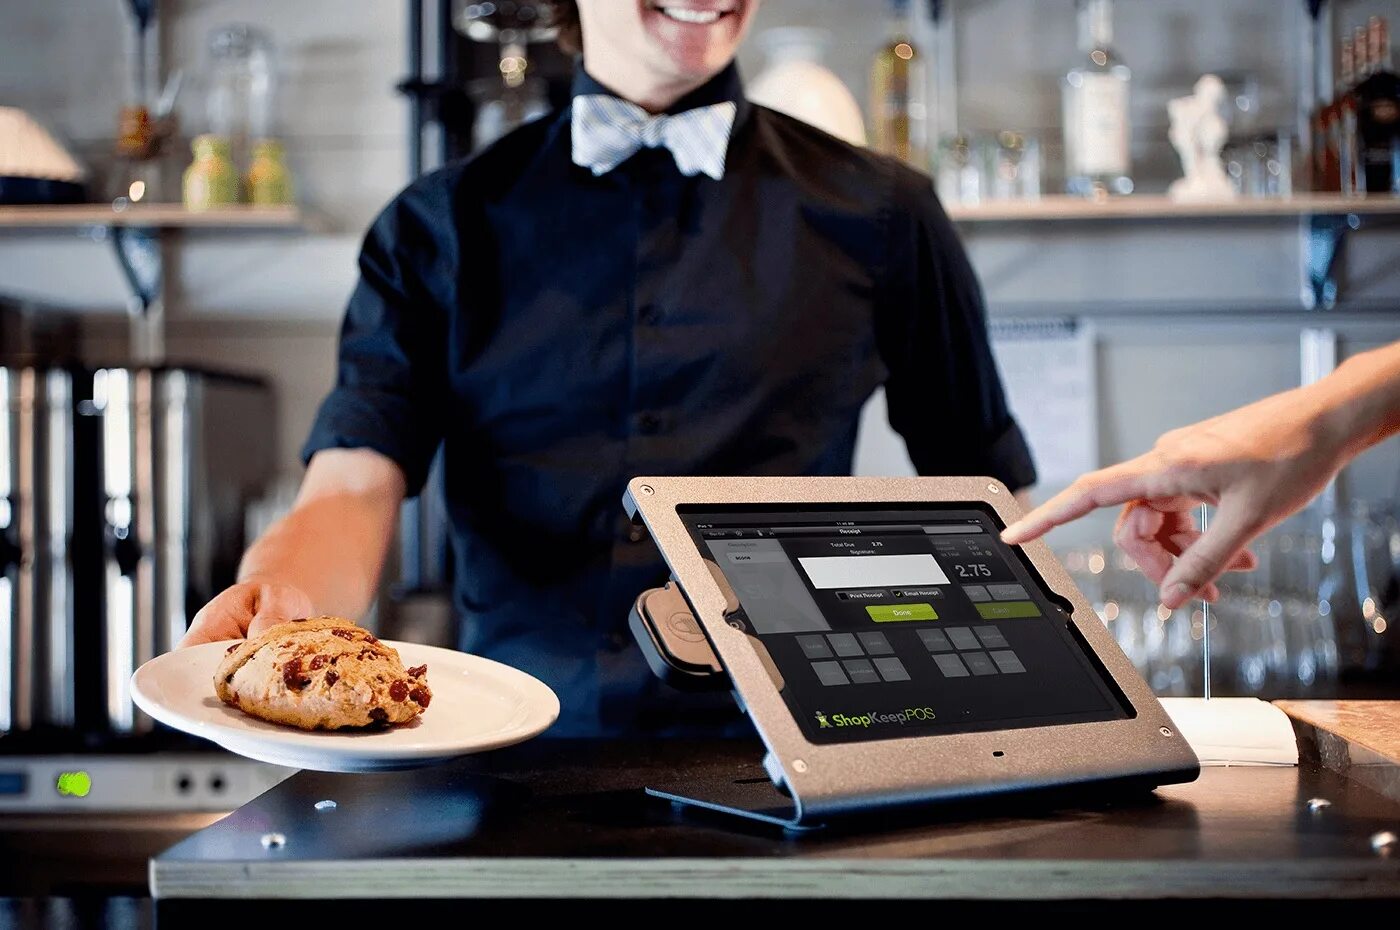 Order dinner. Автоматизация ресторана. Инновации в ресторанном бизнесе. Автоматизация ресторанного бизнеса. Технологии в ресторанном бизнесе.